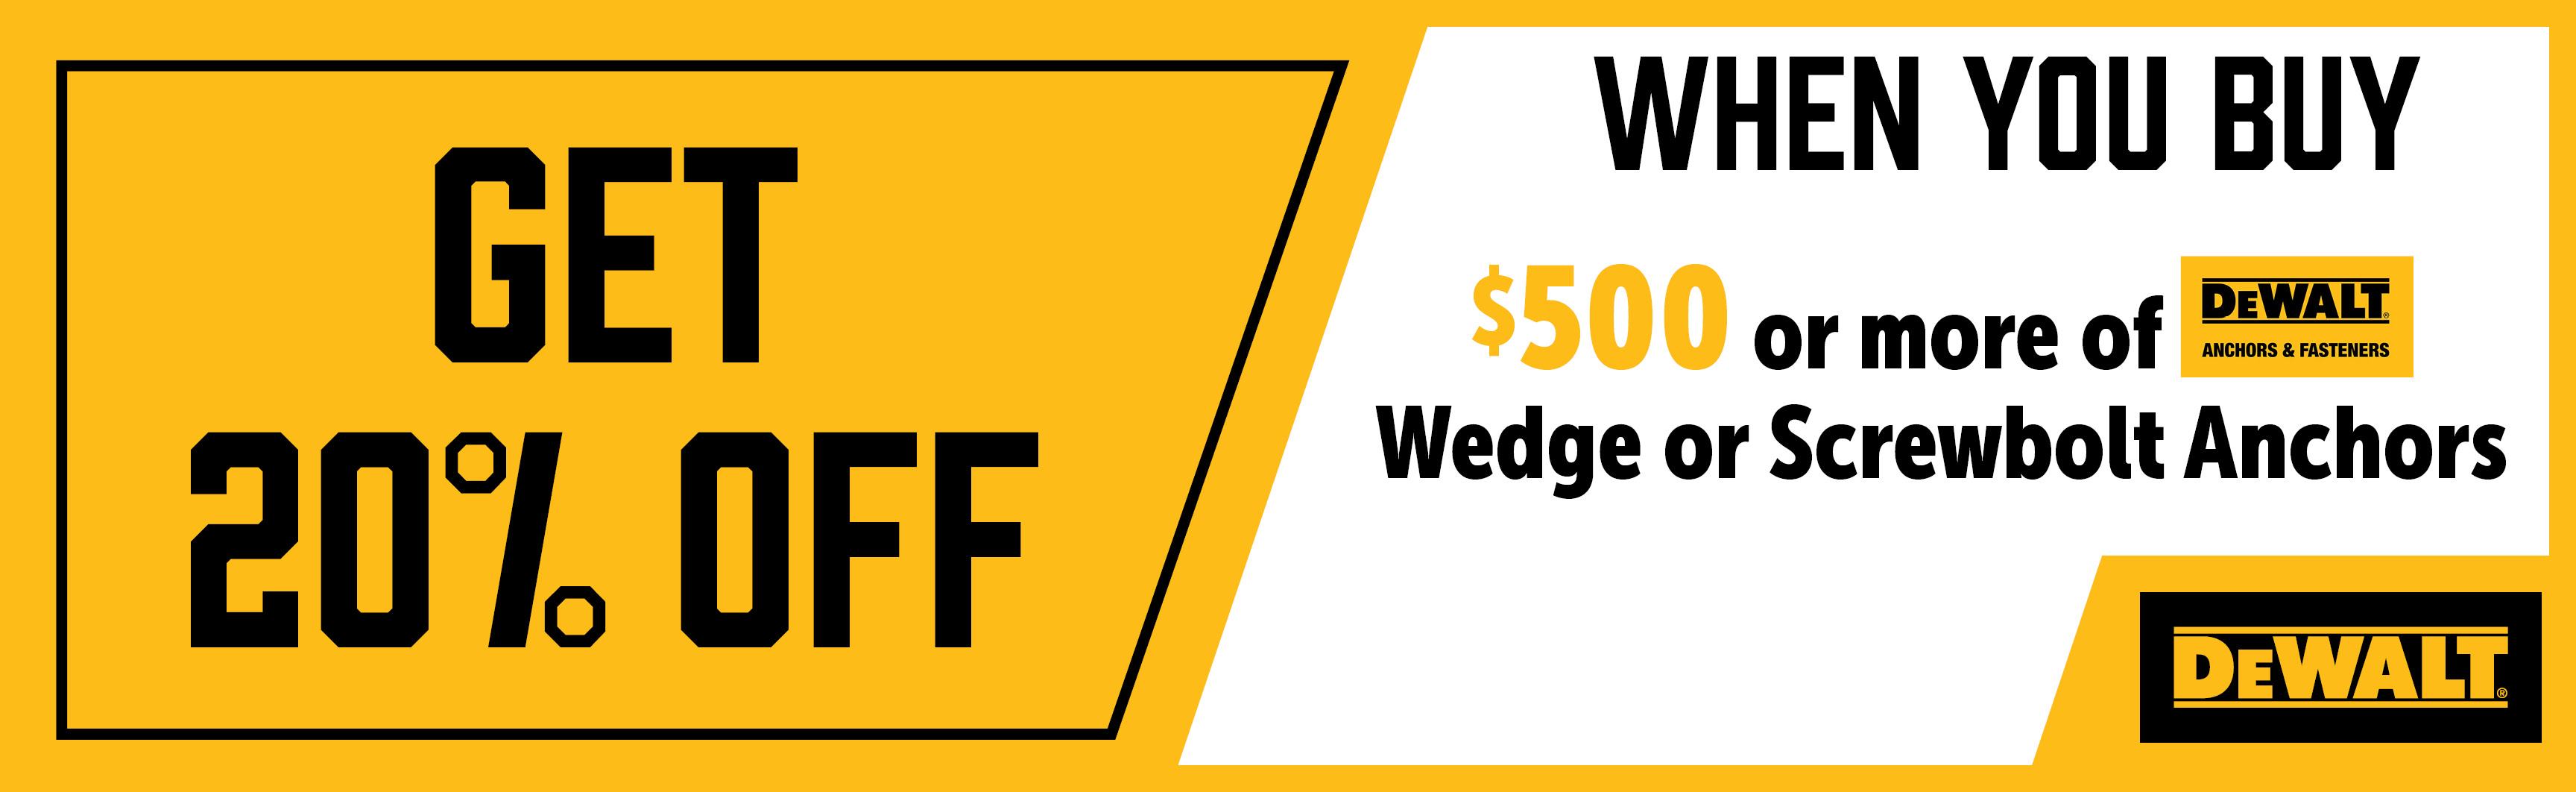 Dewalt Jul-Sep: Buy $500 of Wedge & Screwbolt Anchors and get 20% off